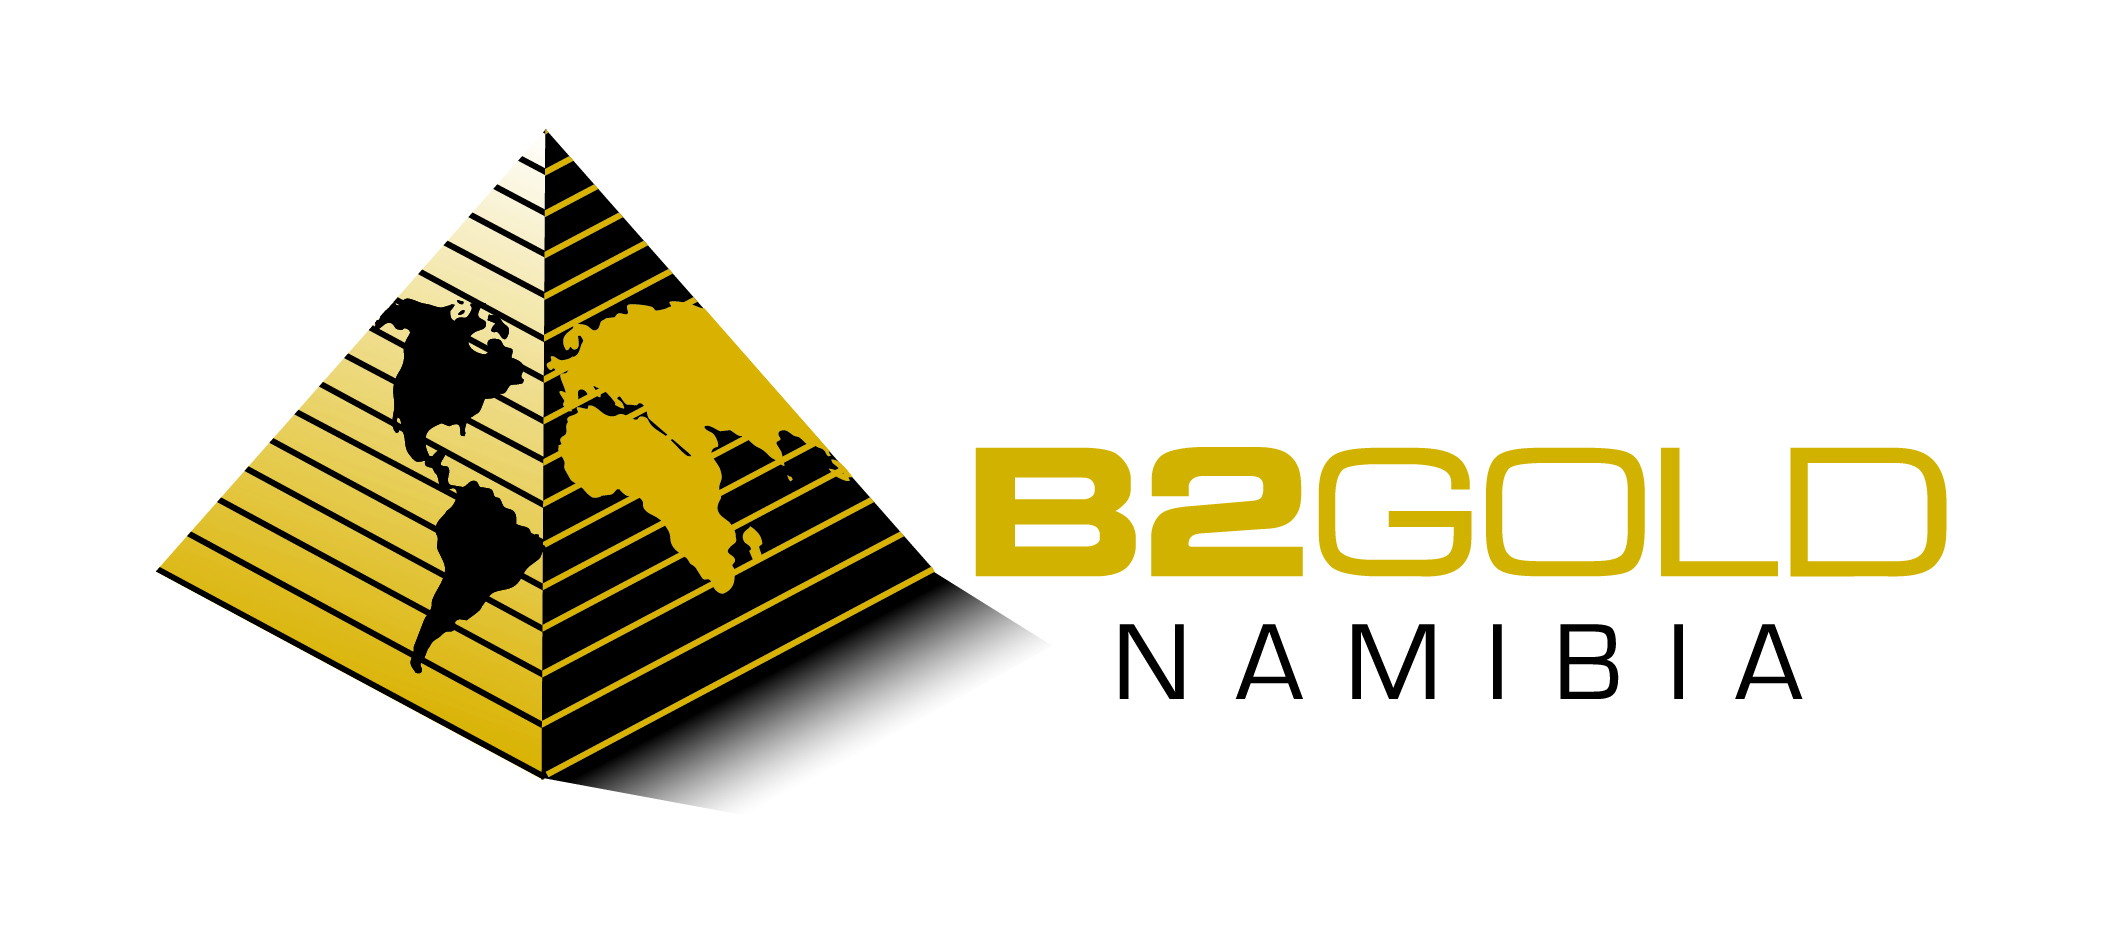 B2GoldNamibia Logo2